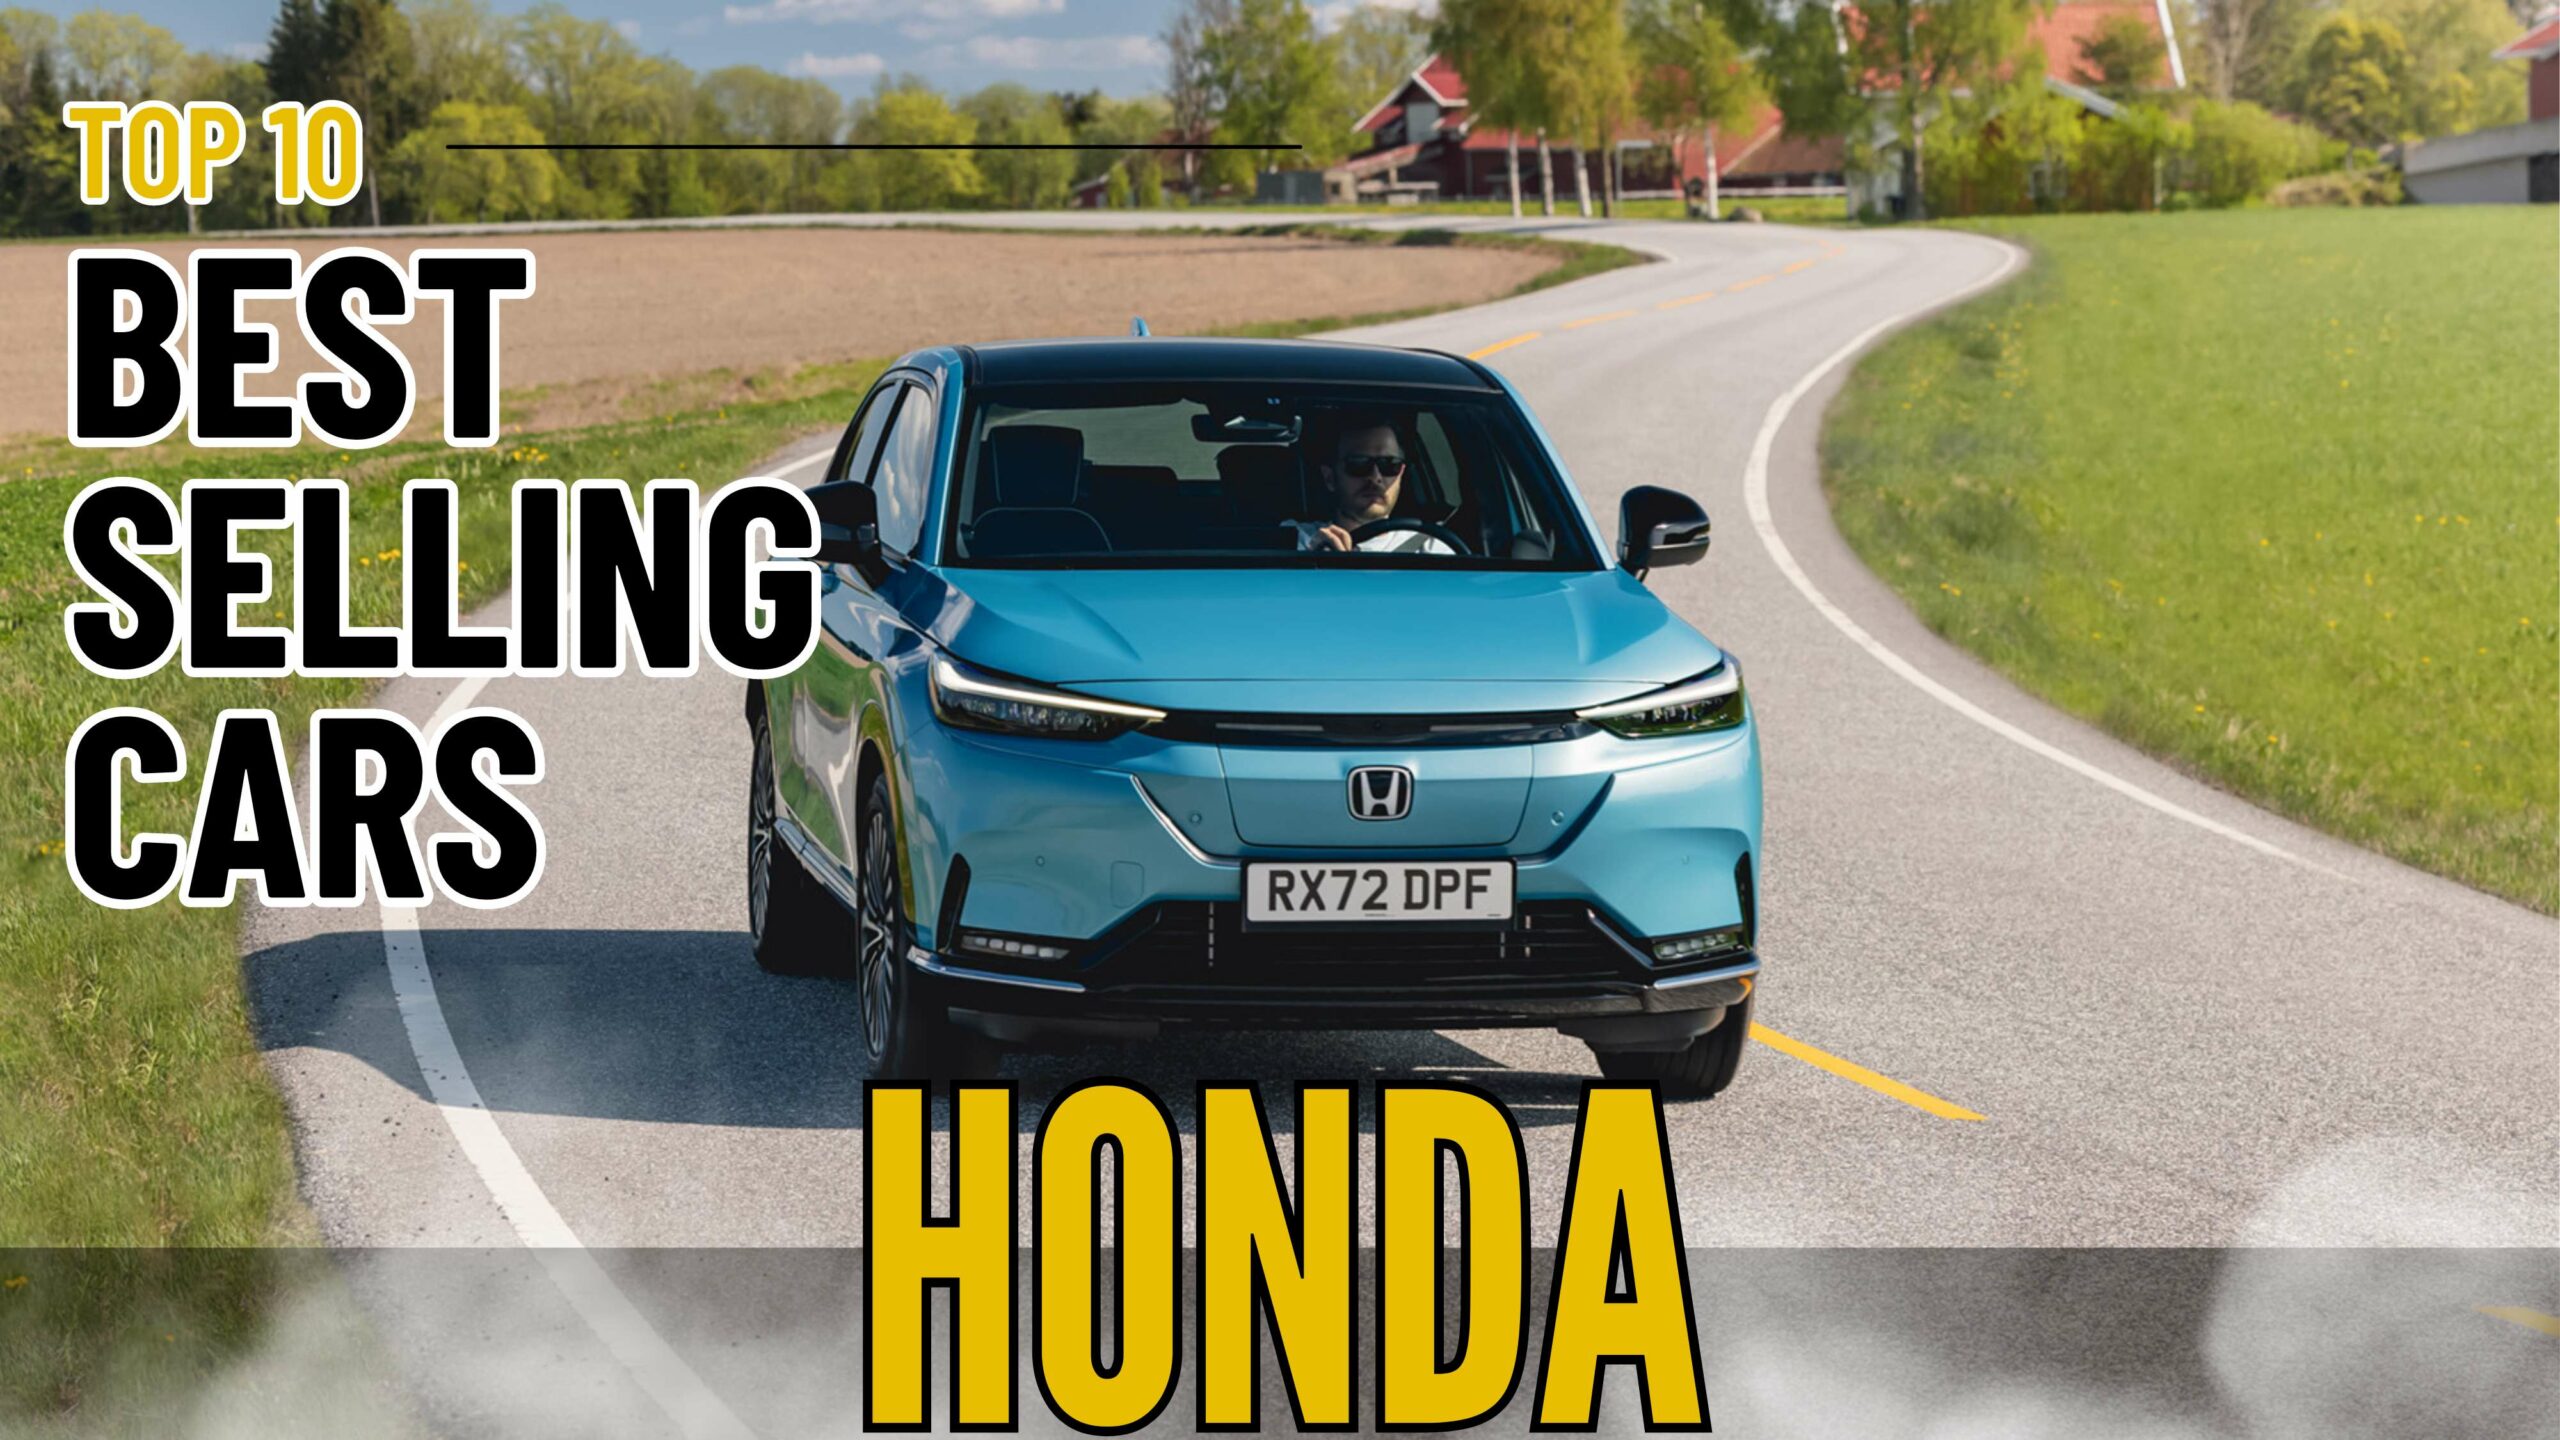 Honda Top 10 Best Selling Cars